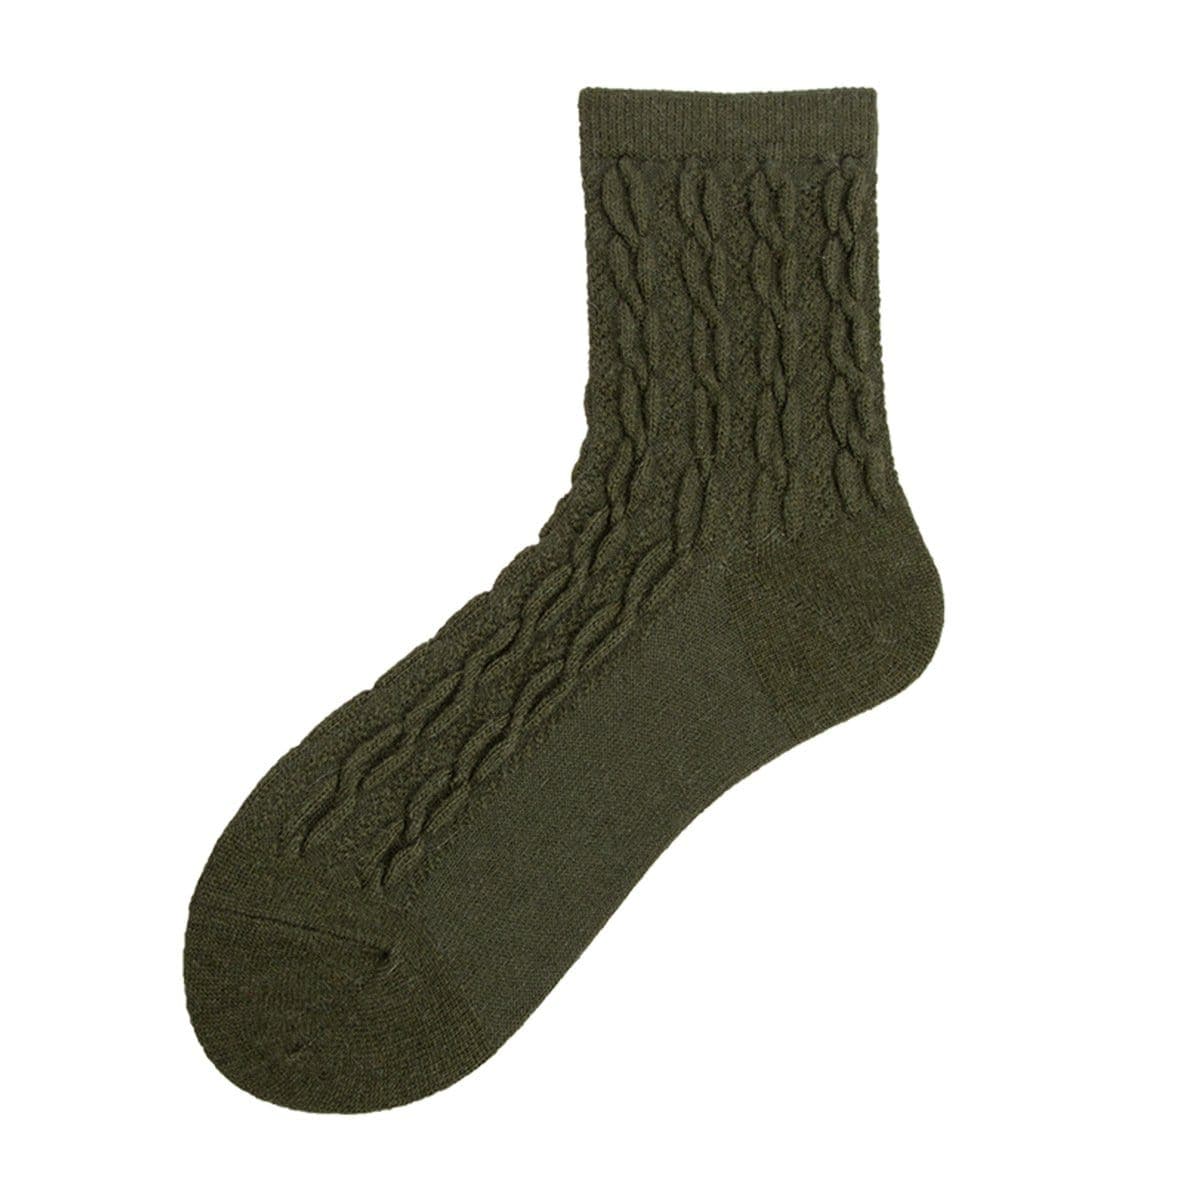 Twisted pattern design socks